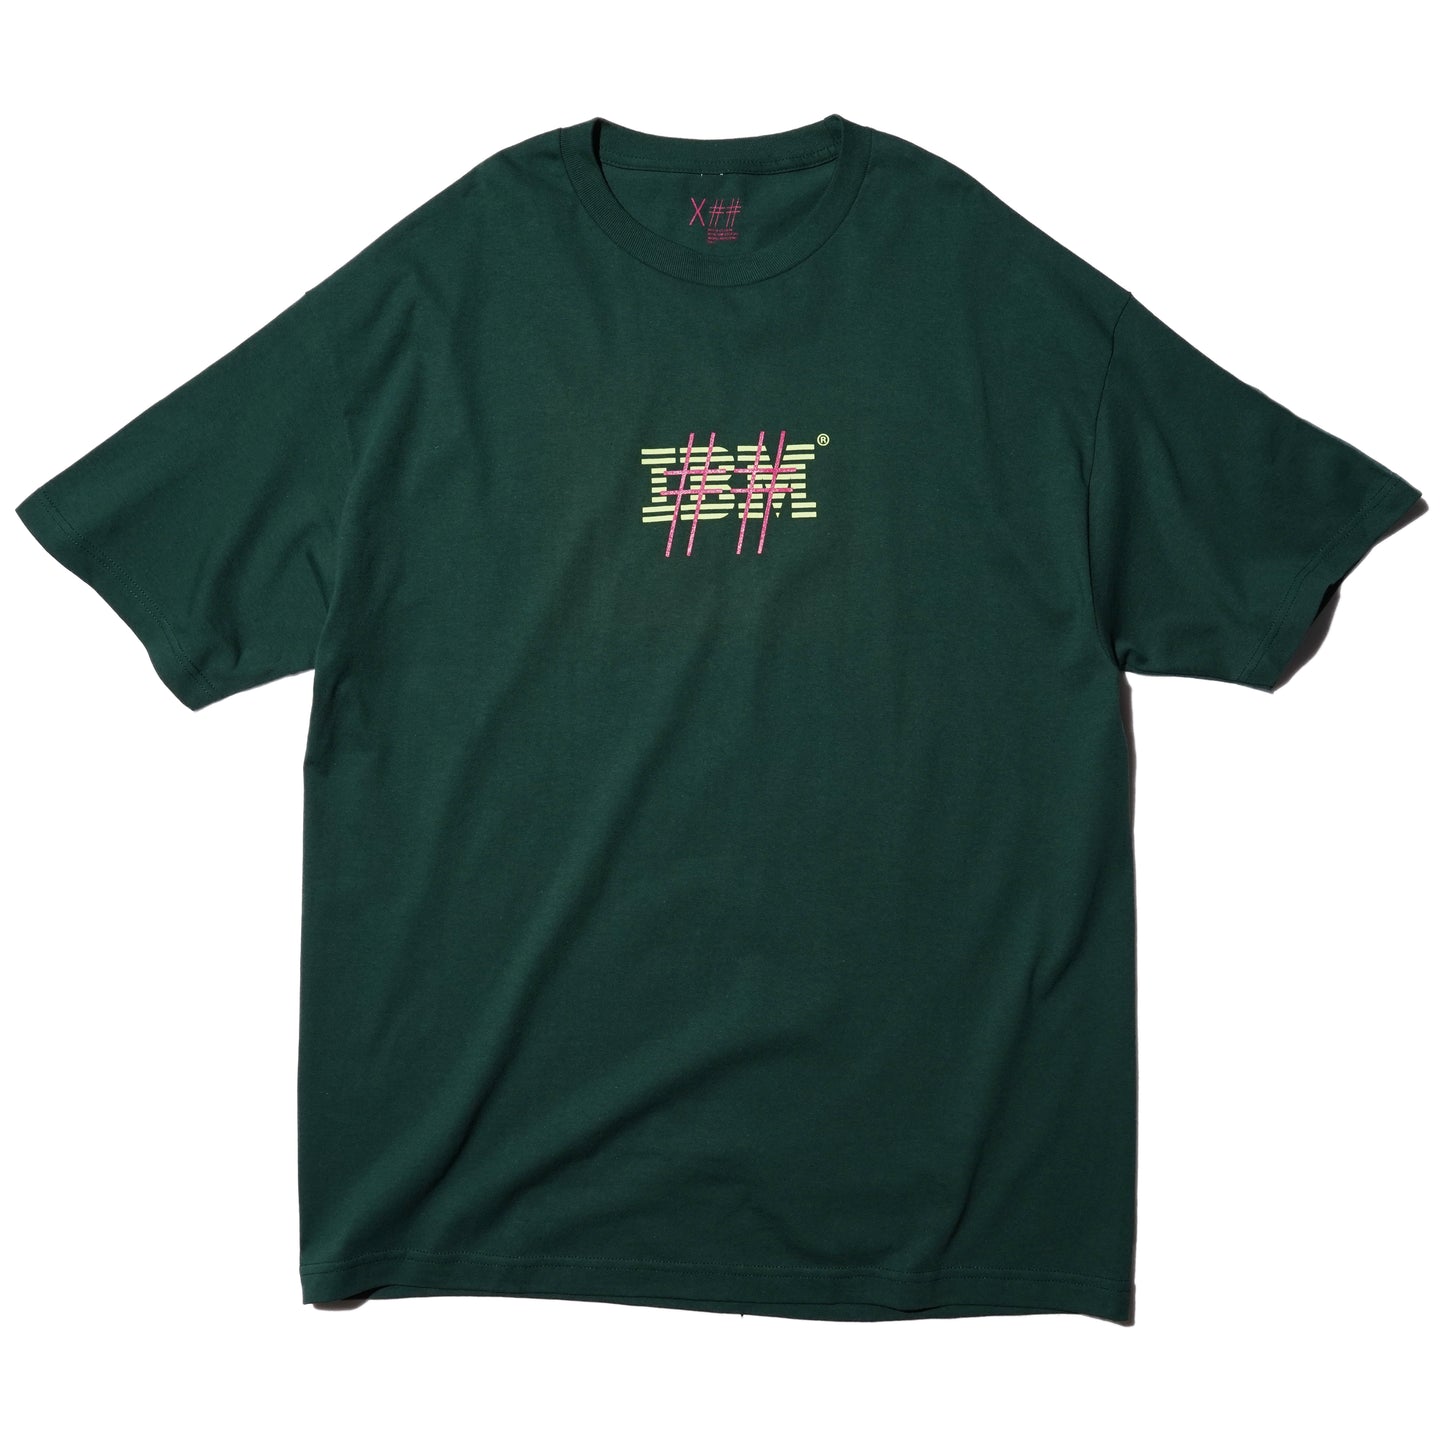 IBM## T-SHIRT